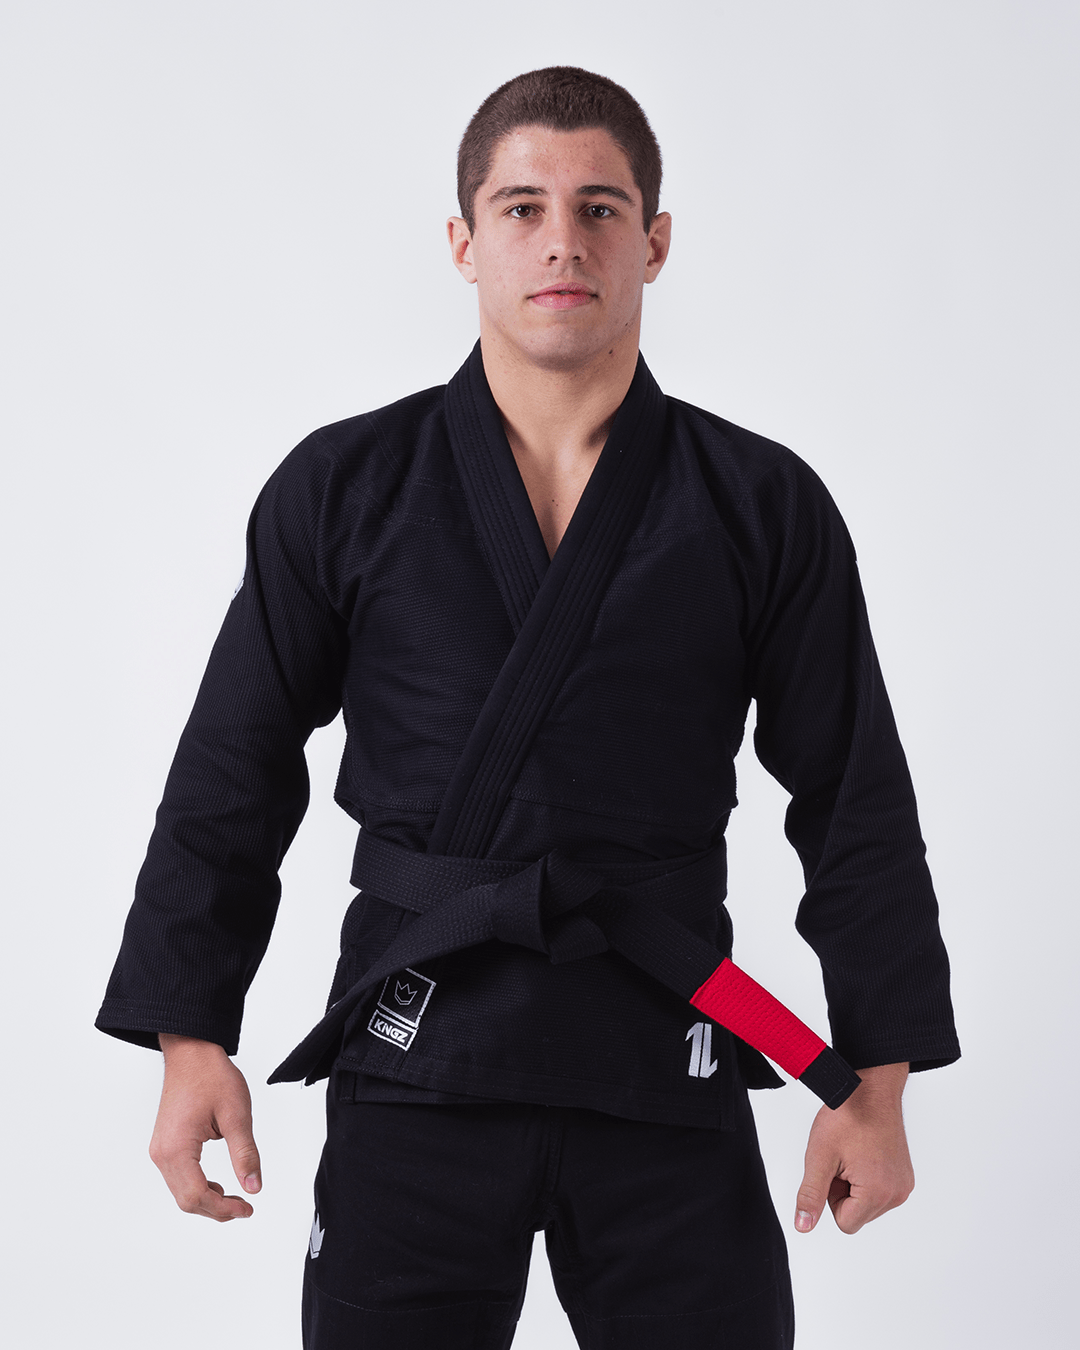  KINGZ Kore Brazilian Jiu Jitsu Gi - Men's Lightweight Durable BJJ  Kimono - IBJJF Legal - 375gsm Pearl Weave Pro Training - (Black) A1 :  Clothing, Shoes & Jewelry